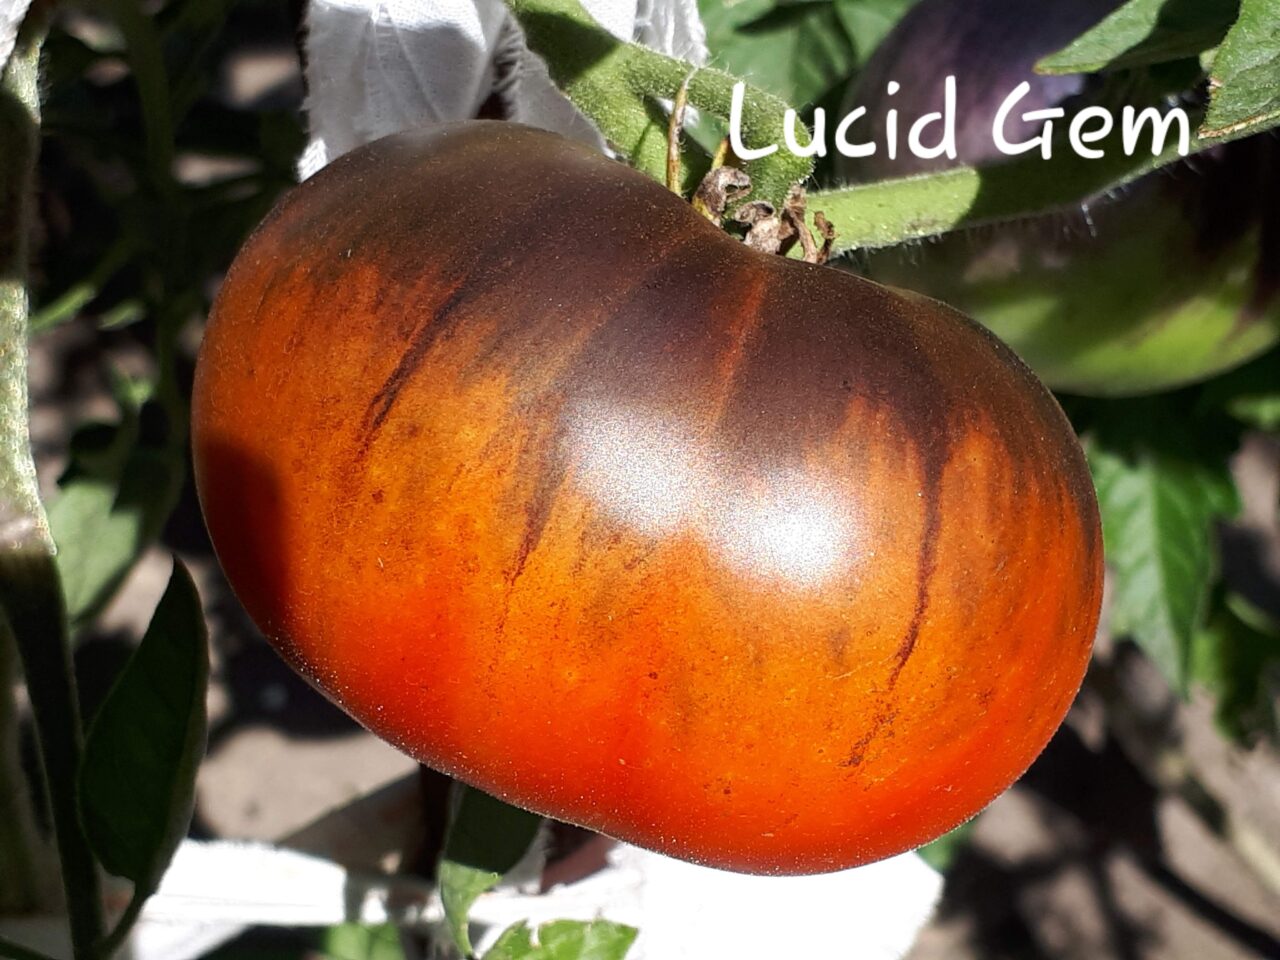 dojrzały pomidor Lucid Gem